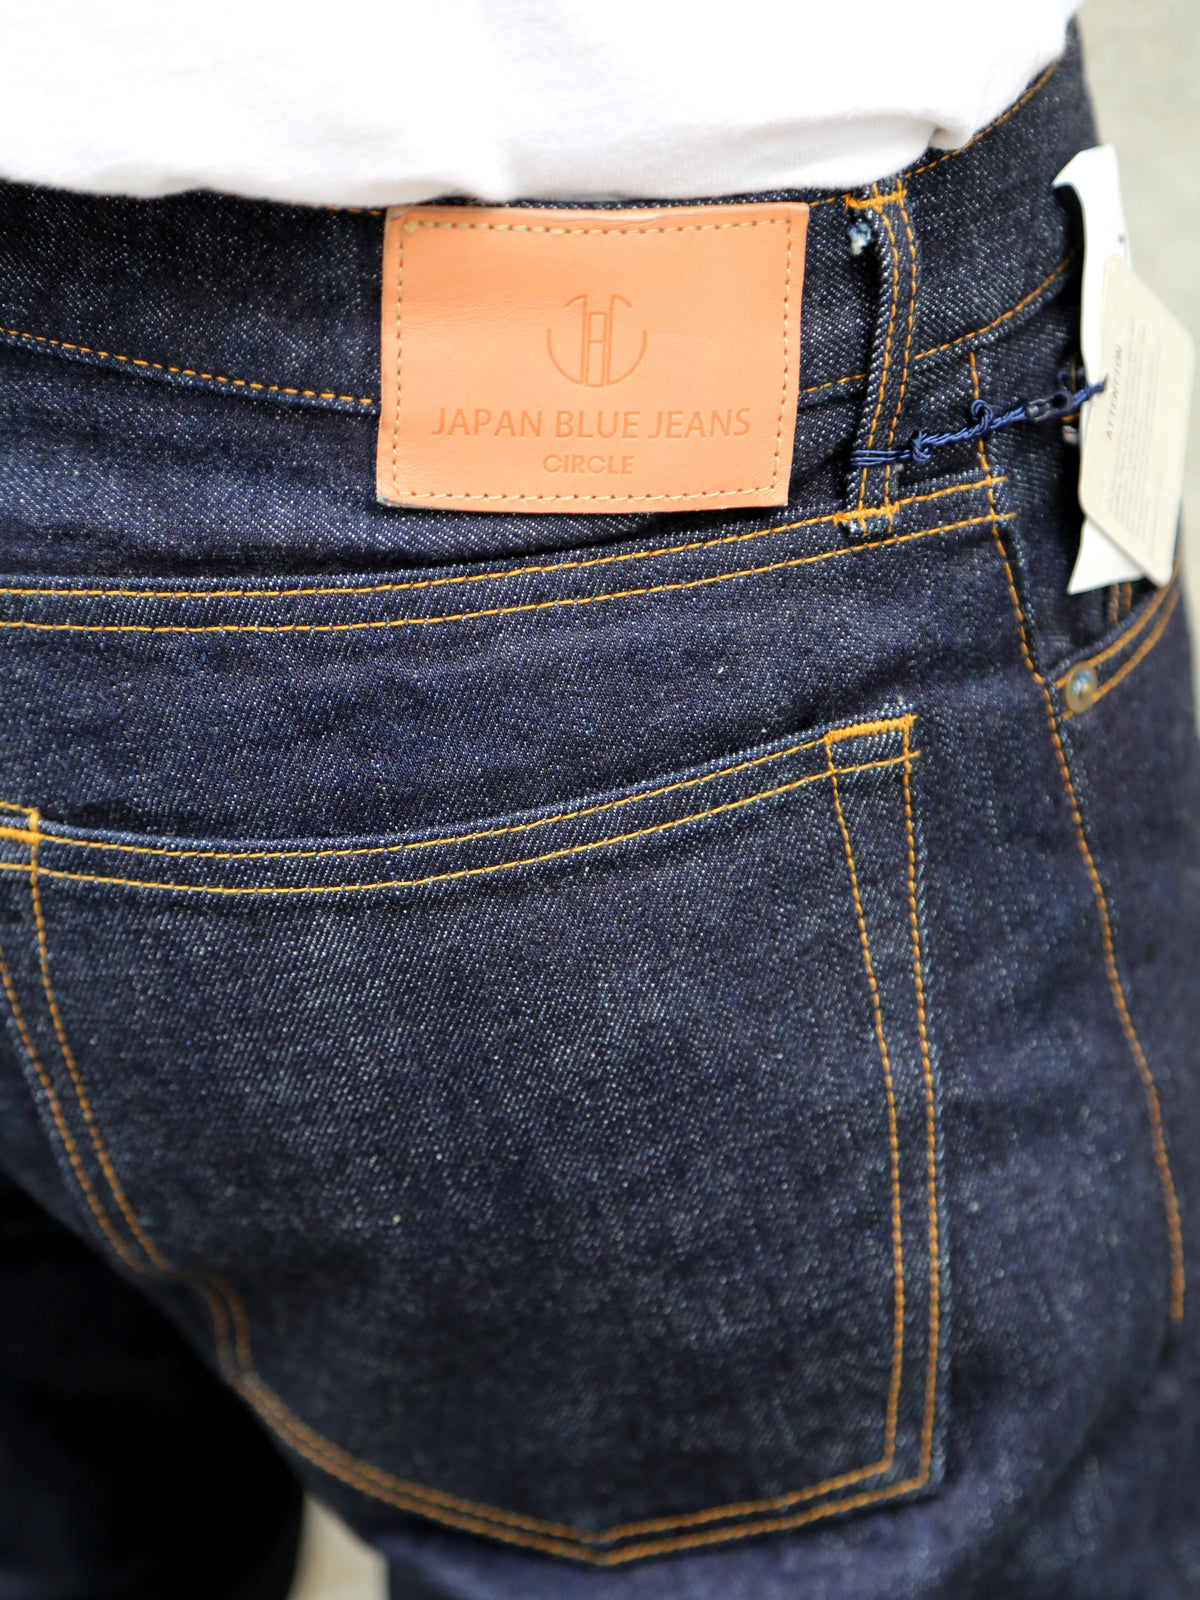 Japan Blue J301 Circle Selvedge Jeans (Slim Straight)